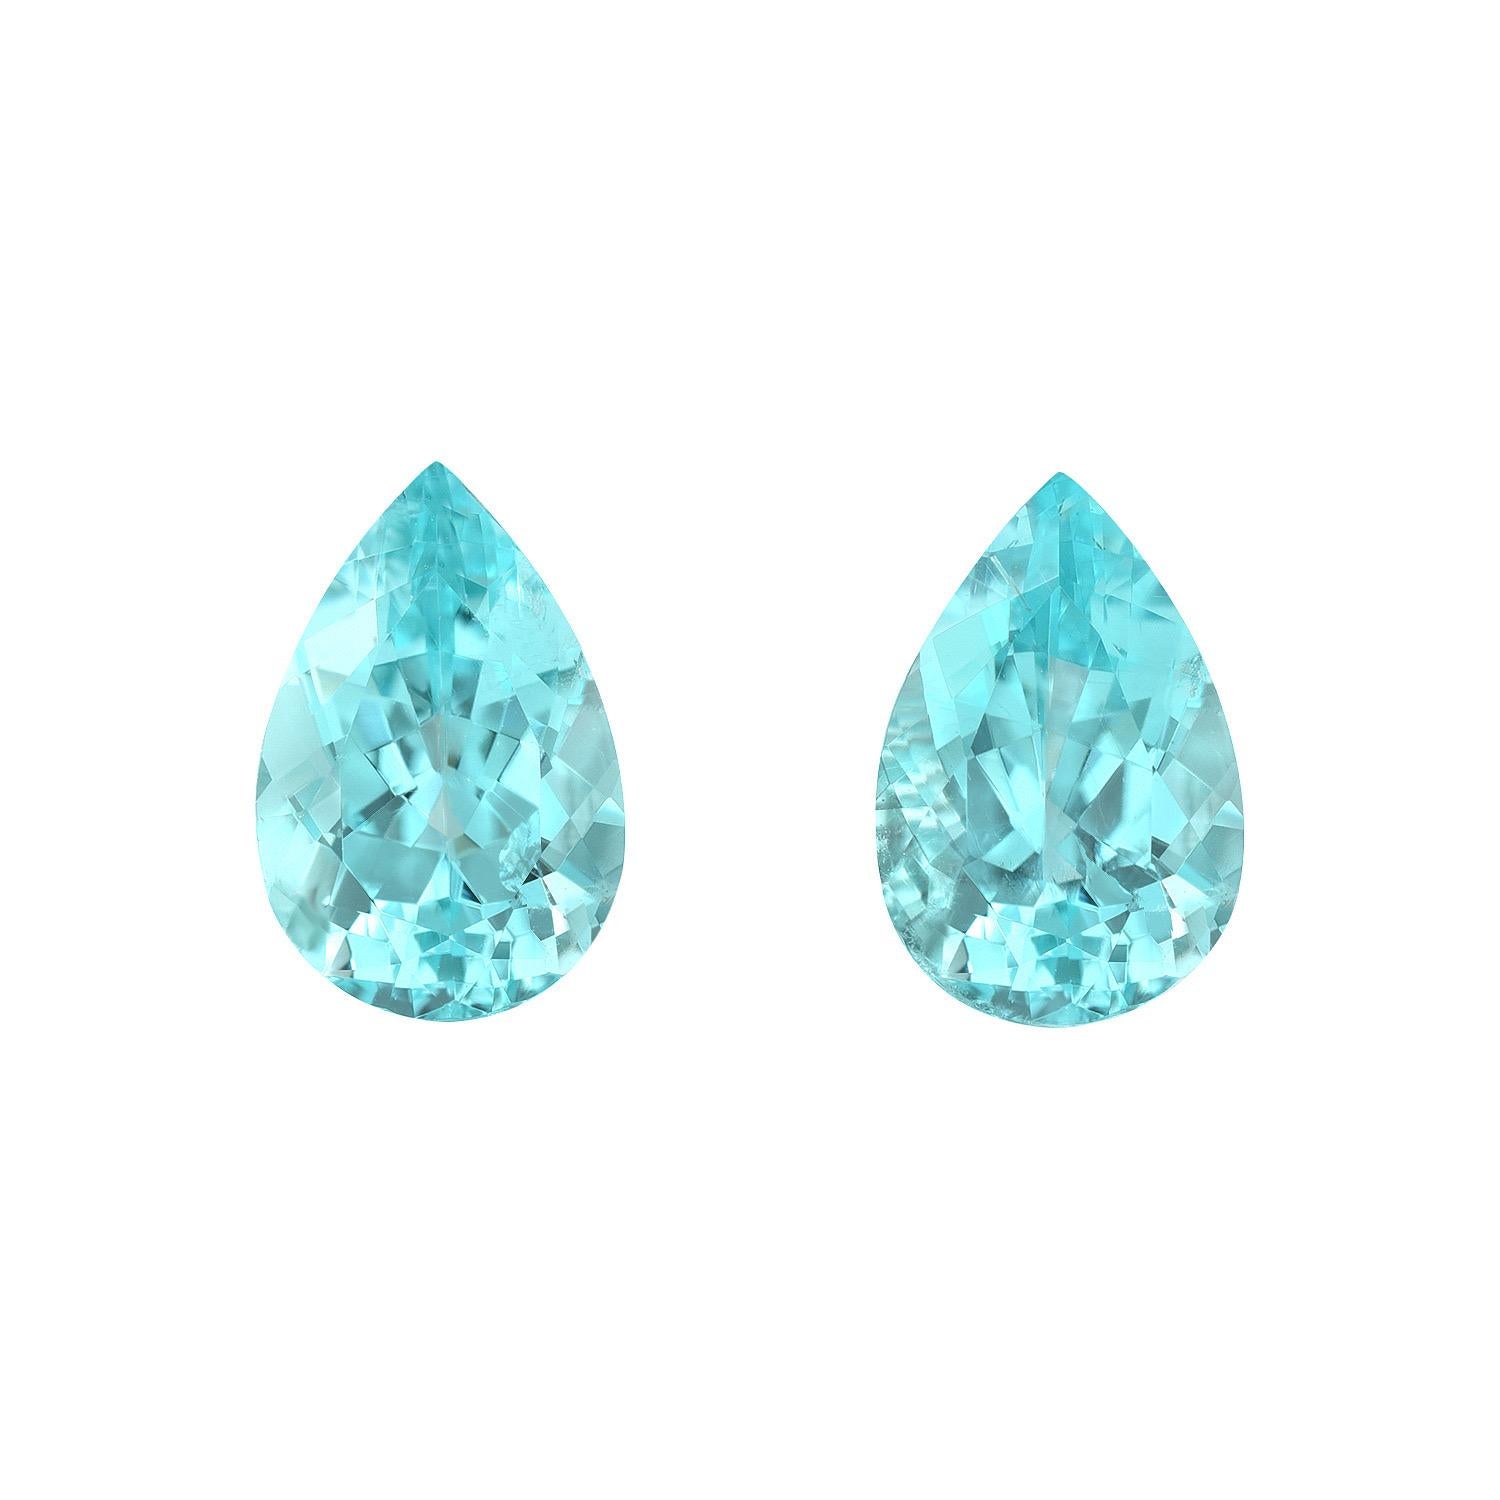 Contemporary Paraiba Tourmaline Earrings Loose Gemstones 6.25 Carats Pear Shapes